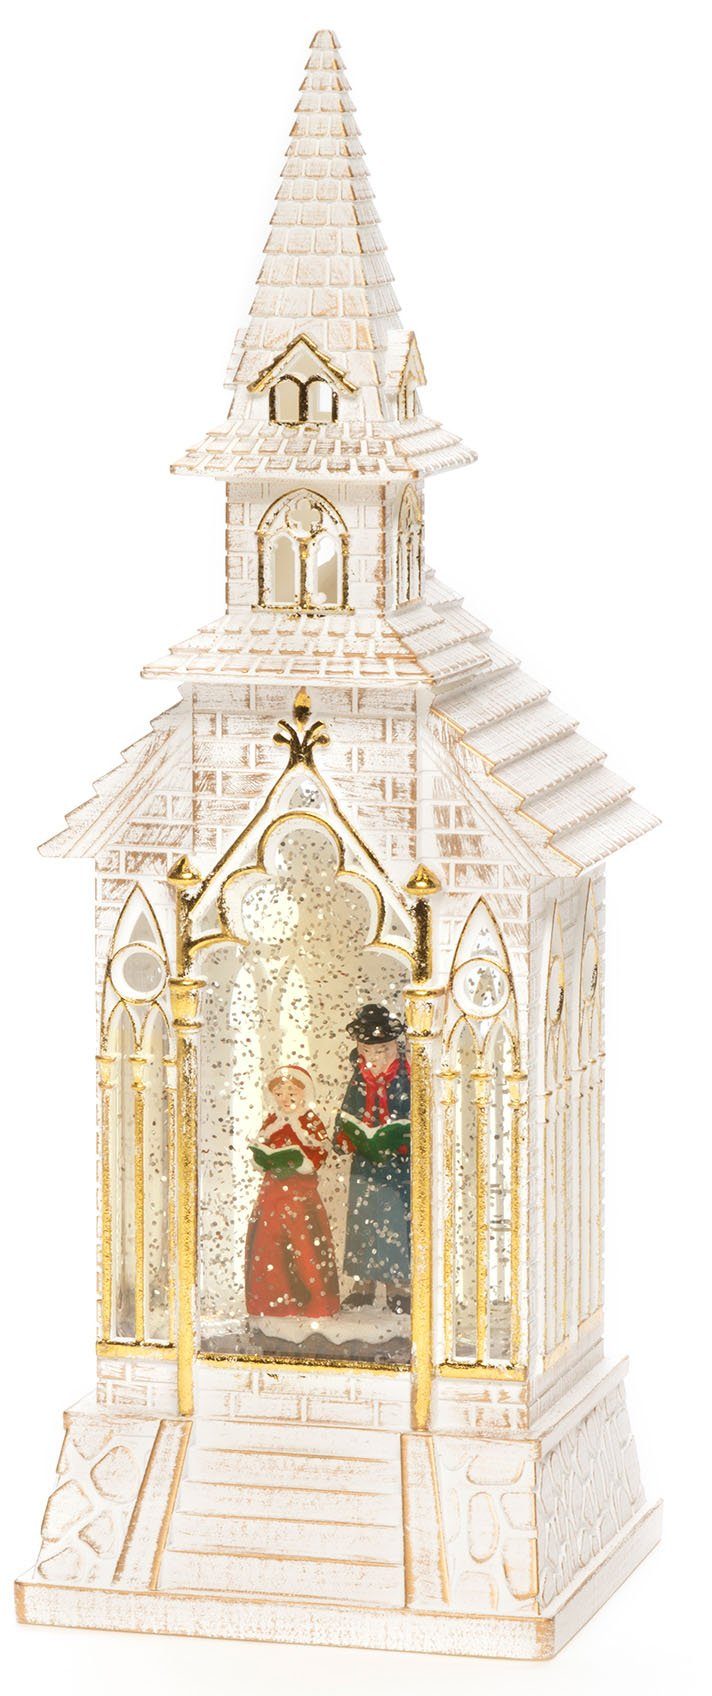 KONSTSMIDE LED LED Warmweiß, LED Kirche, integriert, weiß, fest Laterne wassergefüllt Weihnachtsdeko